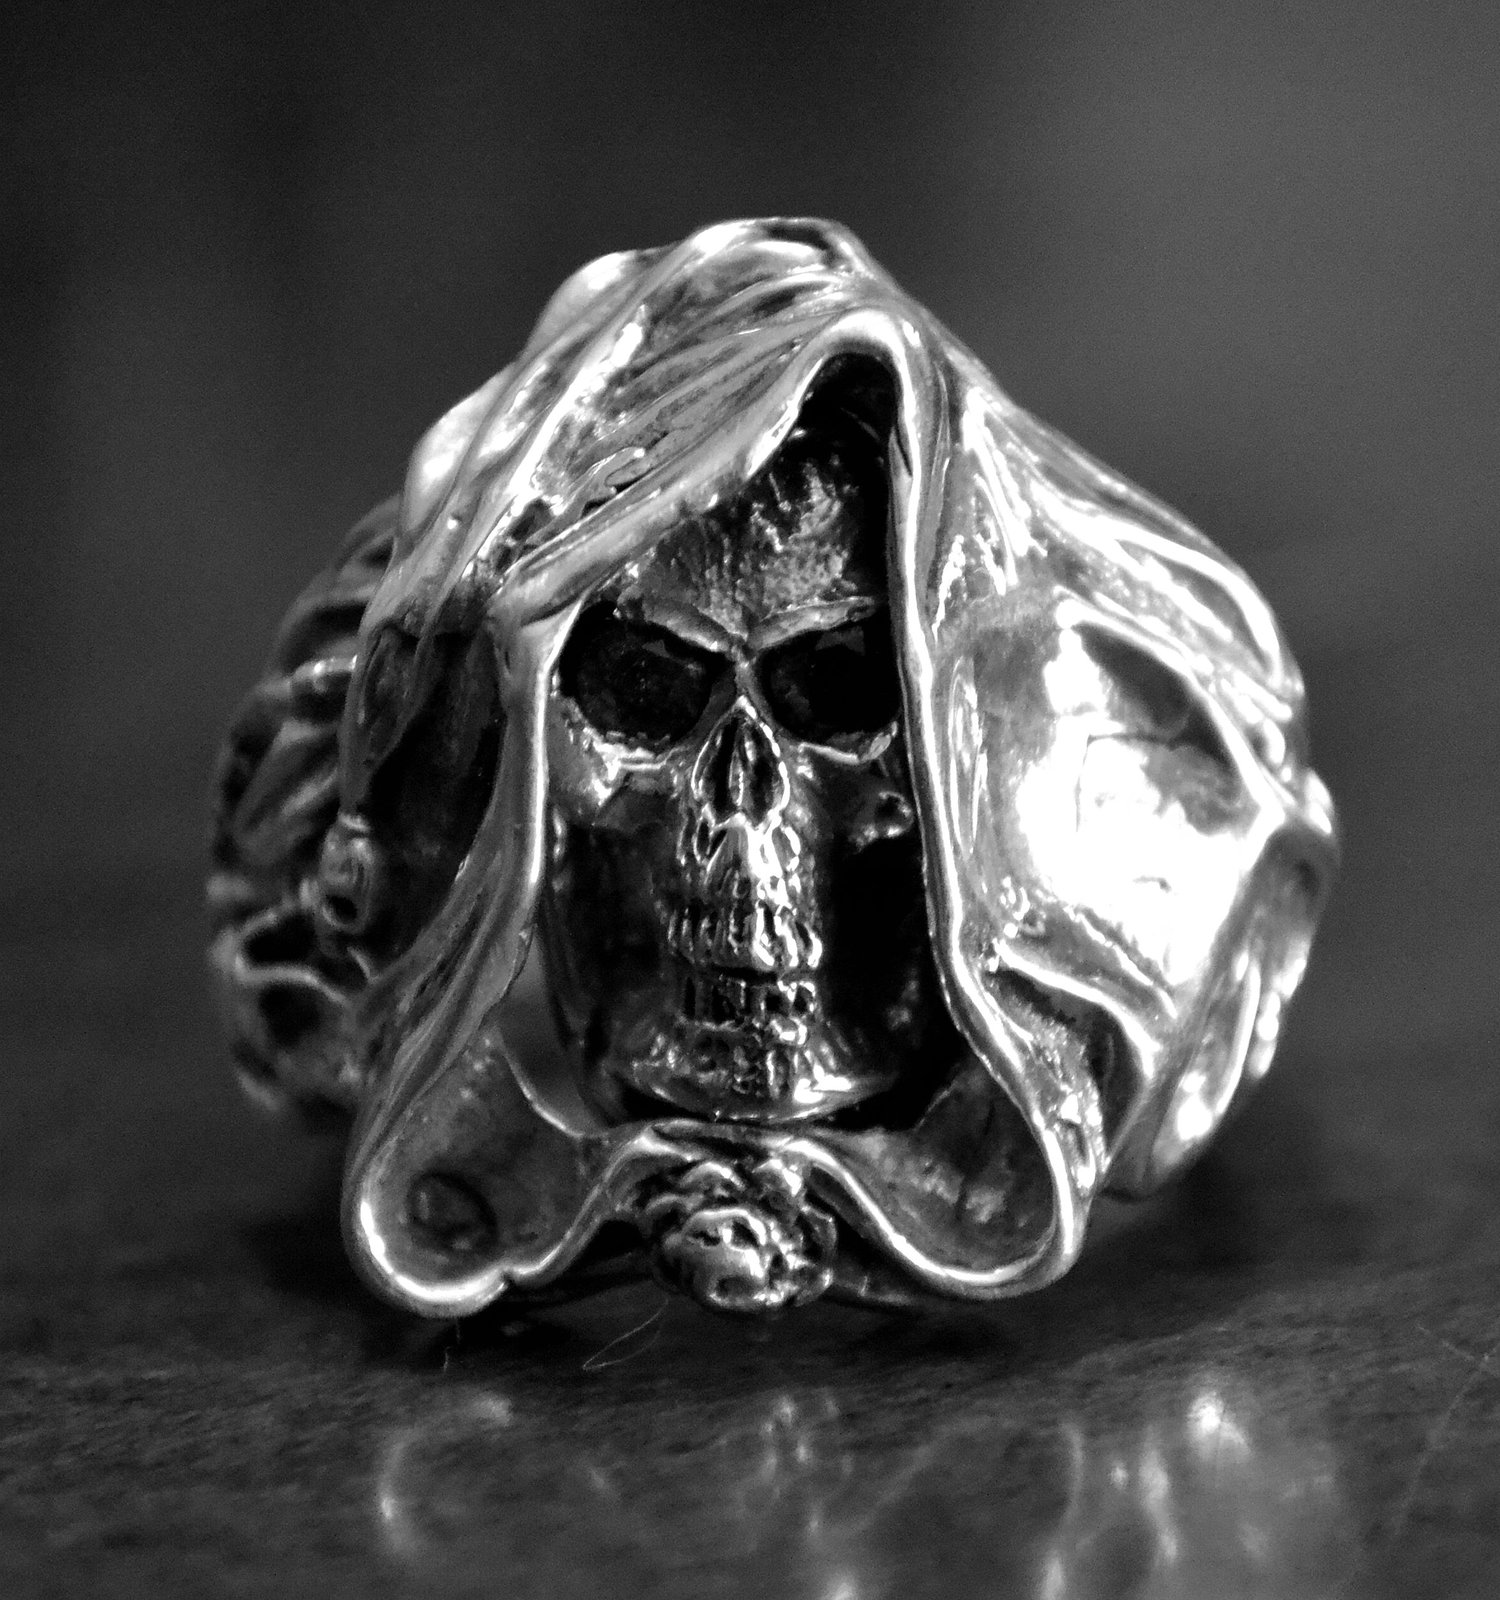 Grim reaper ring in sterling silver